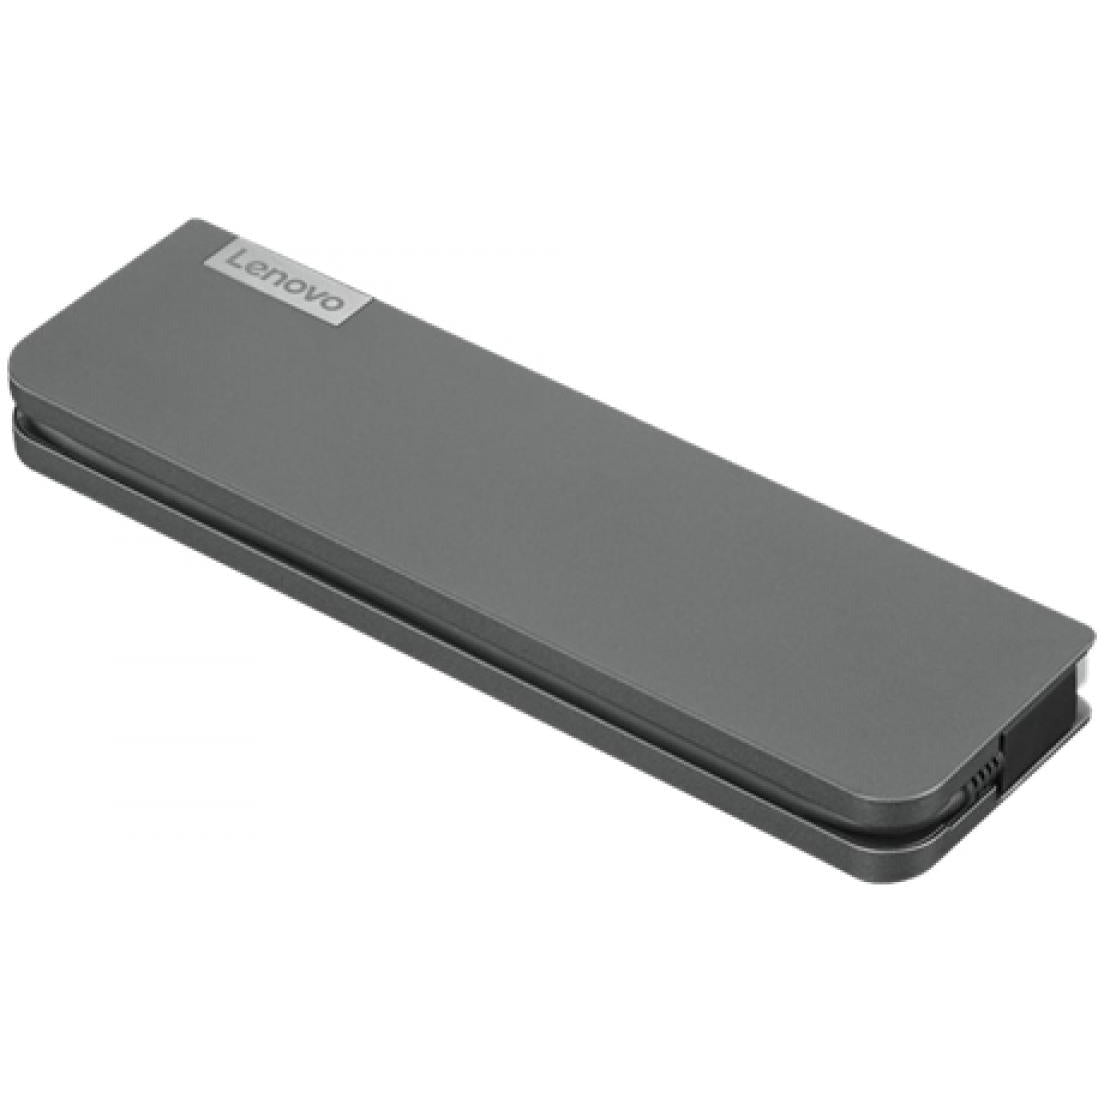 Lenovo USB-C Mini Dock 7-in-1 Portable with HDMI, VGA, USB-C, USB 3.1, USB 2, 3.5mm Audio, Ethernet 45W Charging